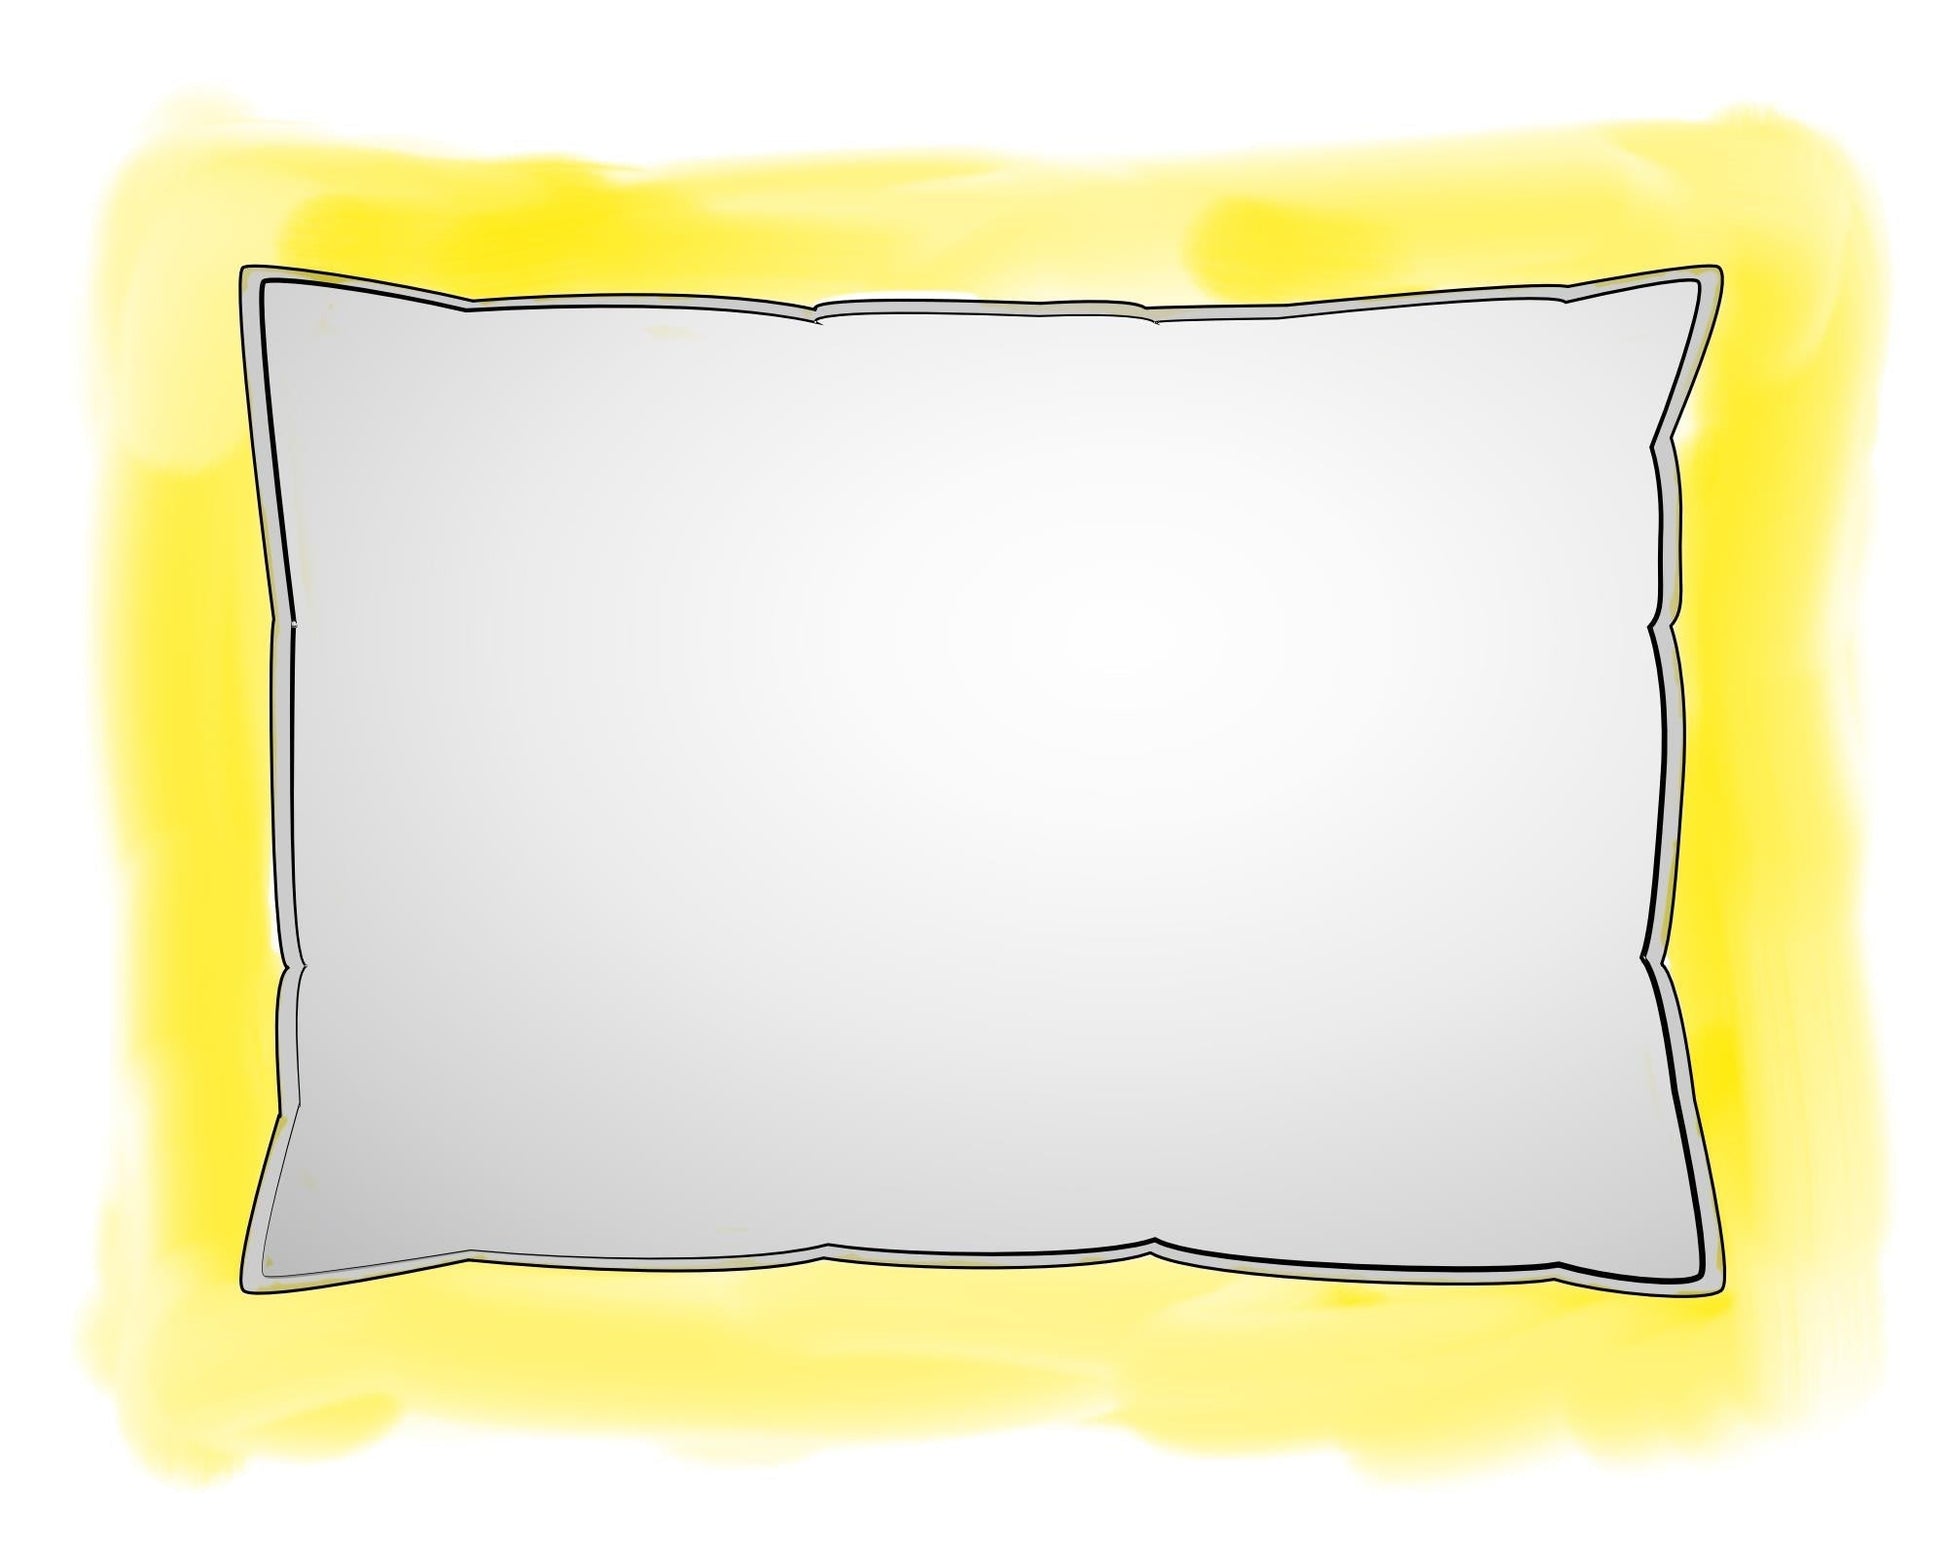 pillow sham in nelson commodore blue horizontal watercolor stripe